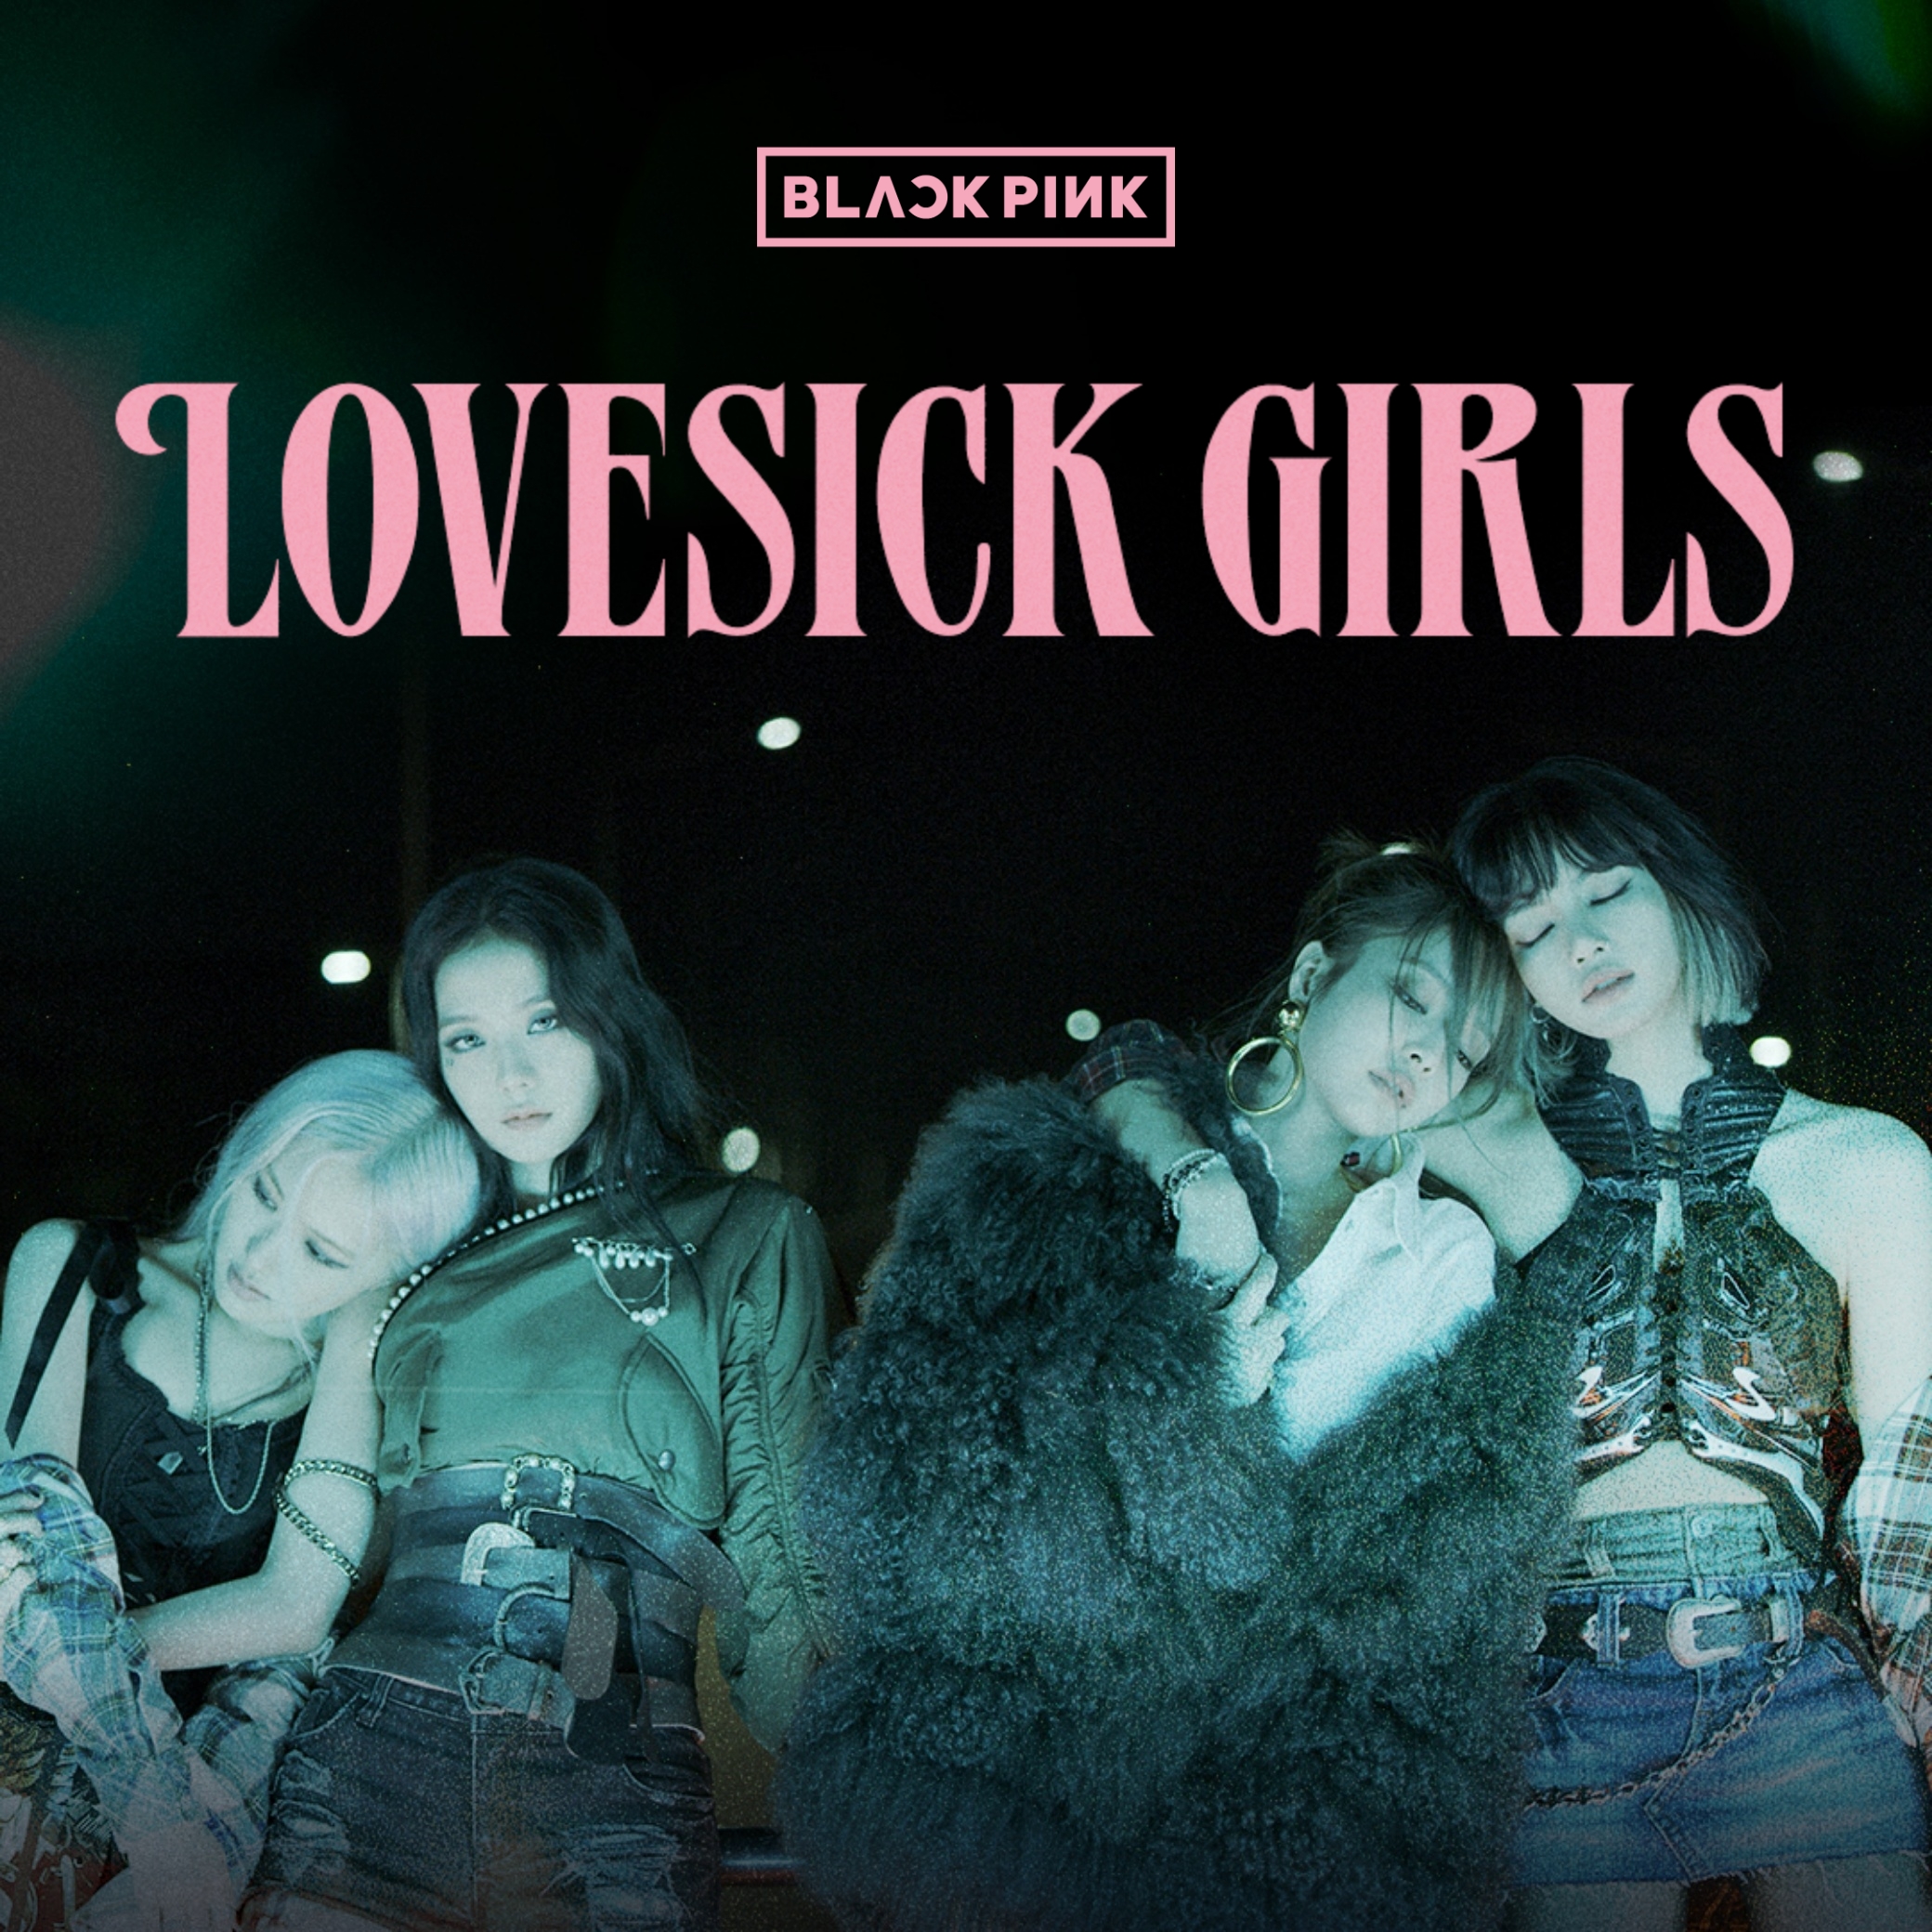 BLACKPINK - Lovesick Girls Album Cover by Yizuz4ever on DeviantArt